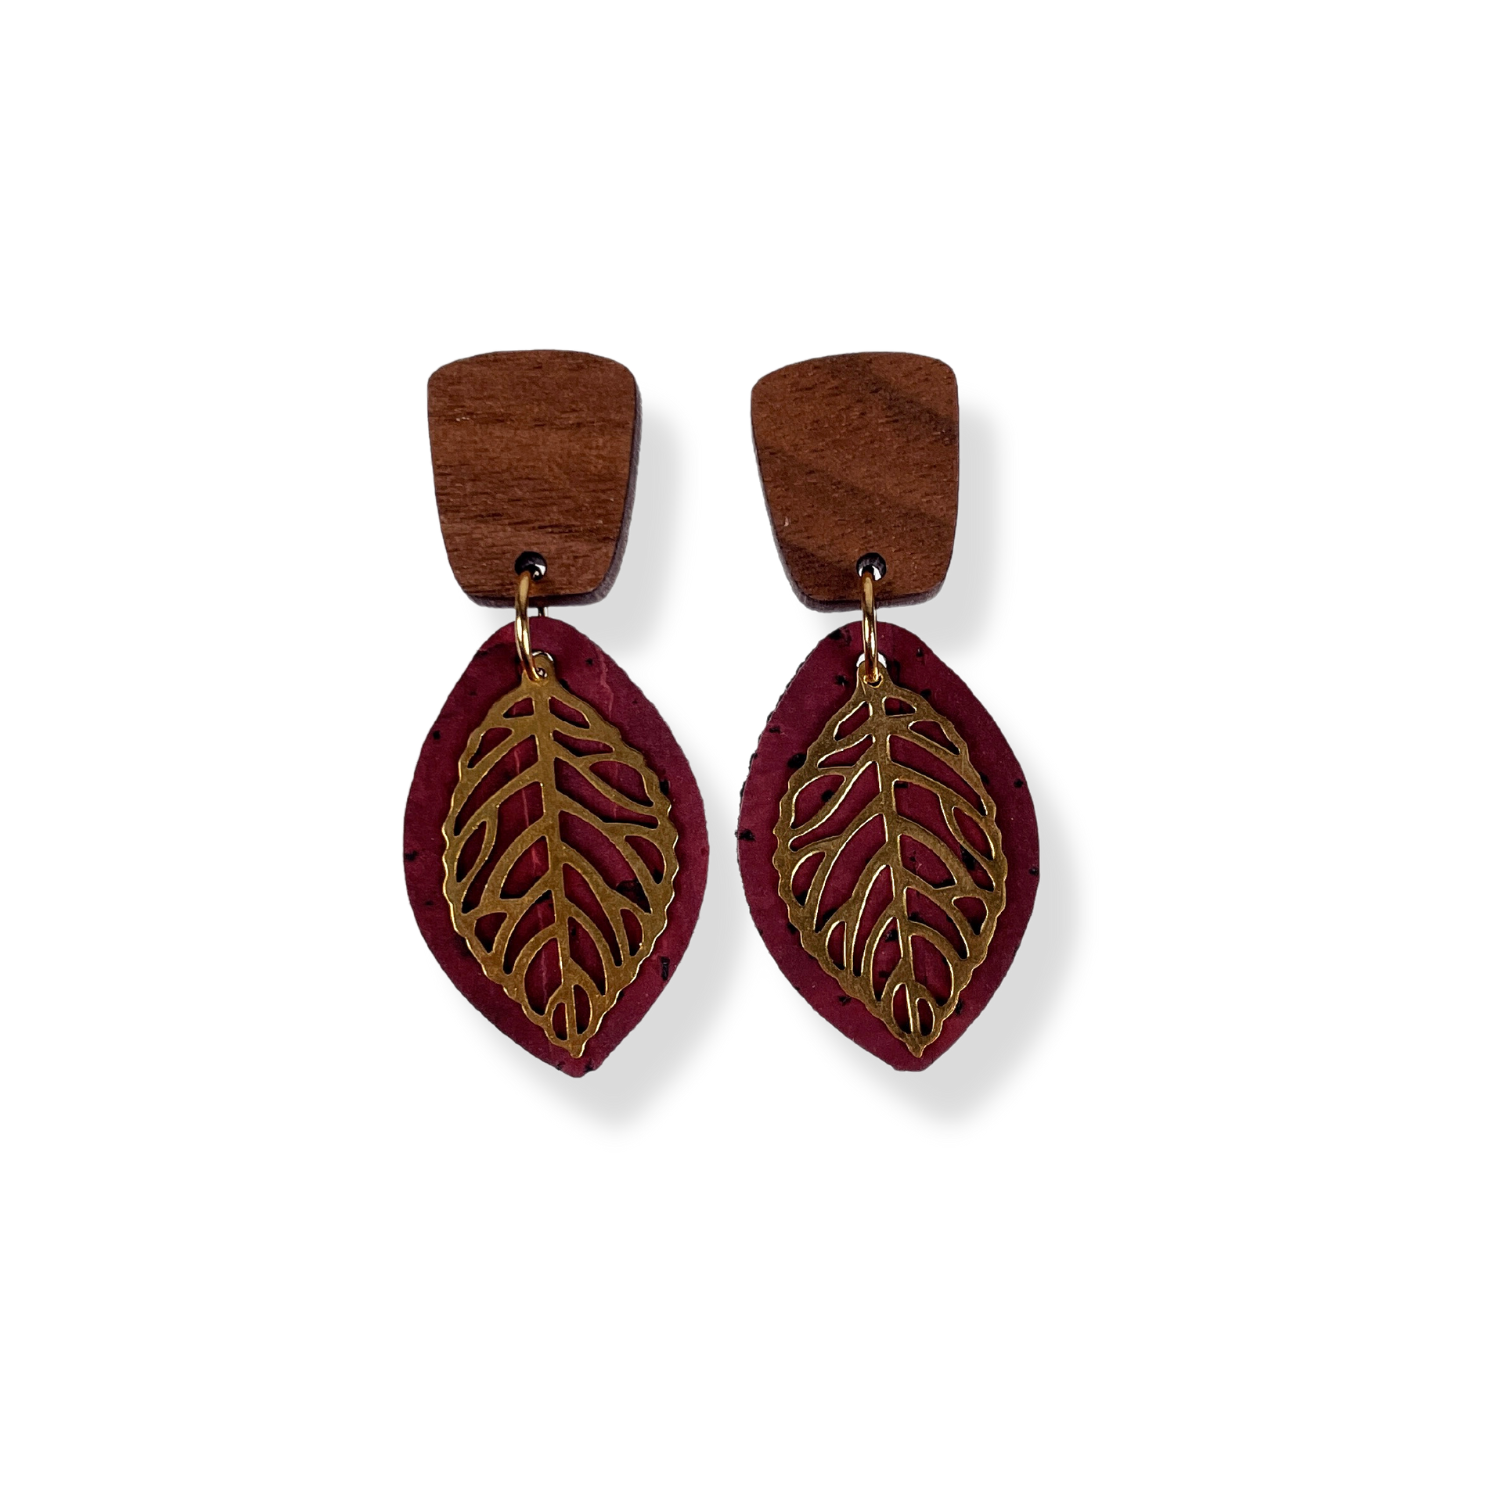 Aspen Walnut Wood and Cork Earrings- Burgundy